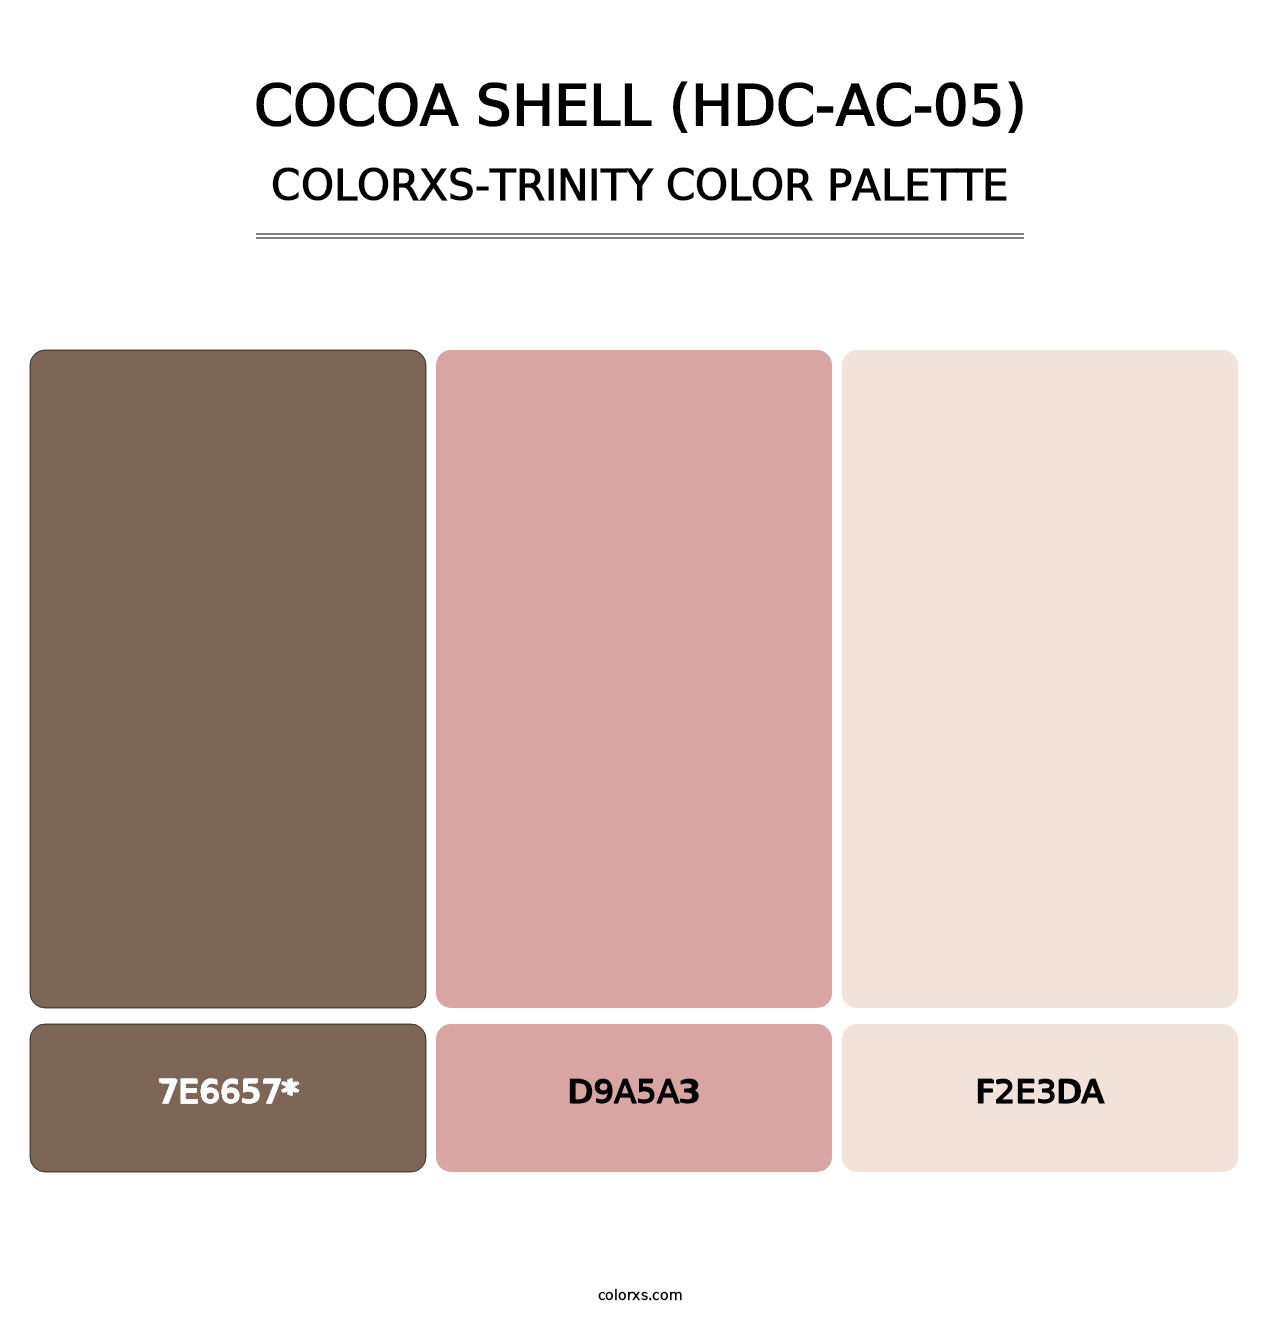 Cocoa Shell (HDC-AC-05) - Colorxs Trinity Palette